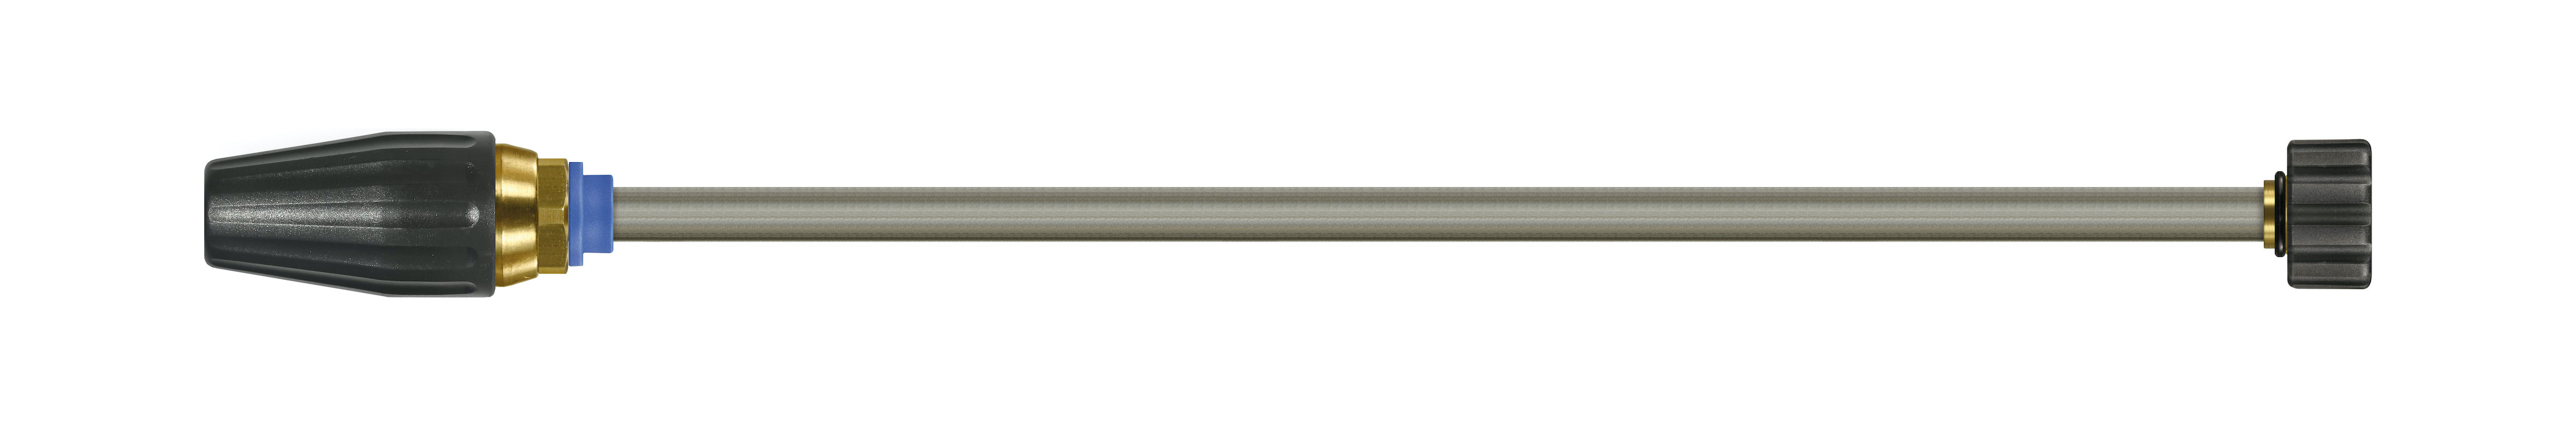 Rotabuse céramique avec lance 430mm, 100-250 bar, Calibre 035.